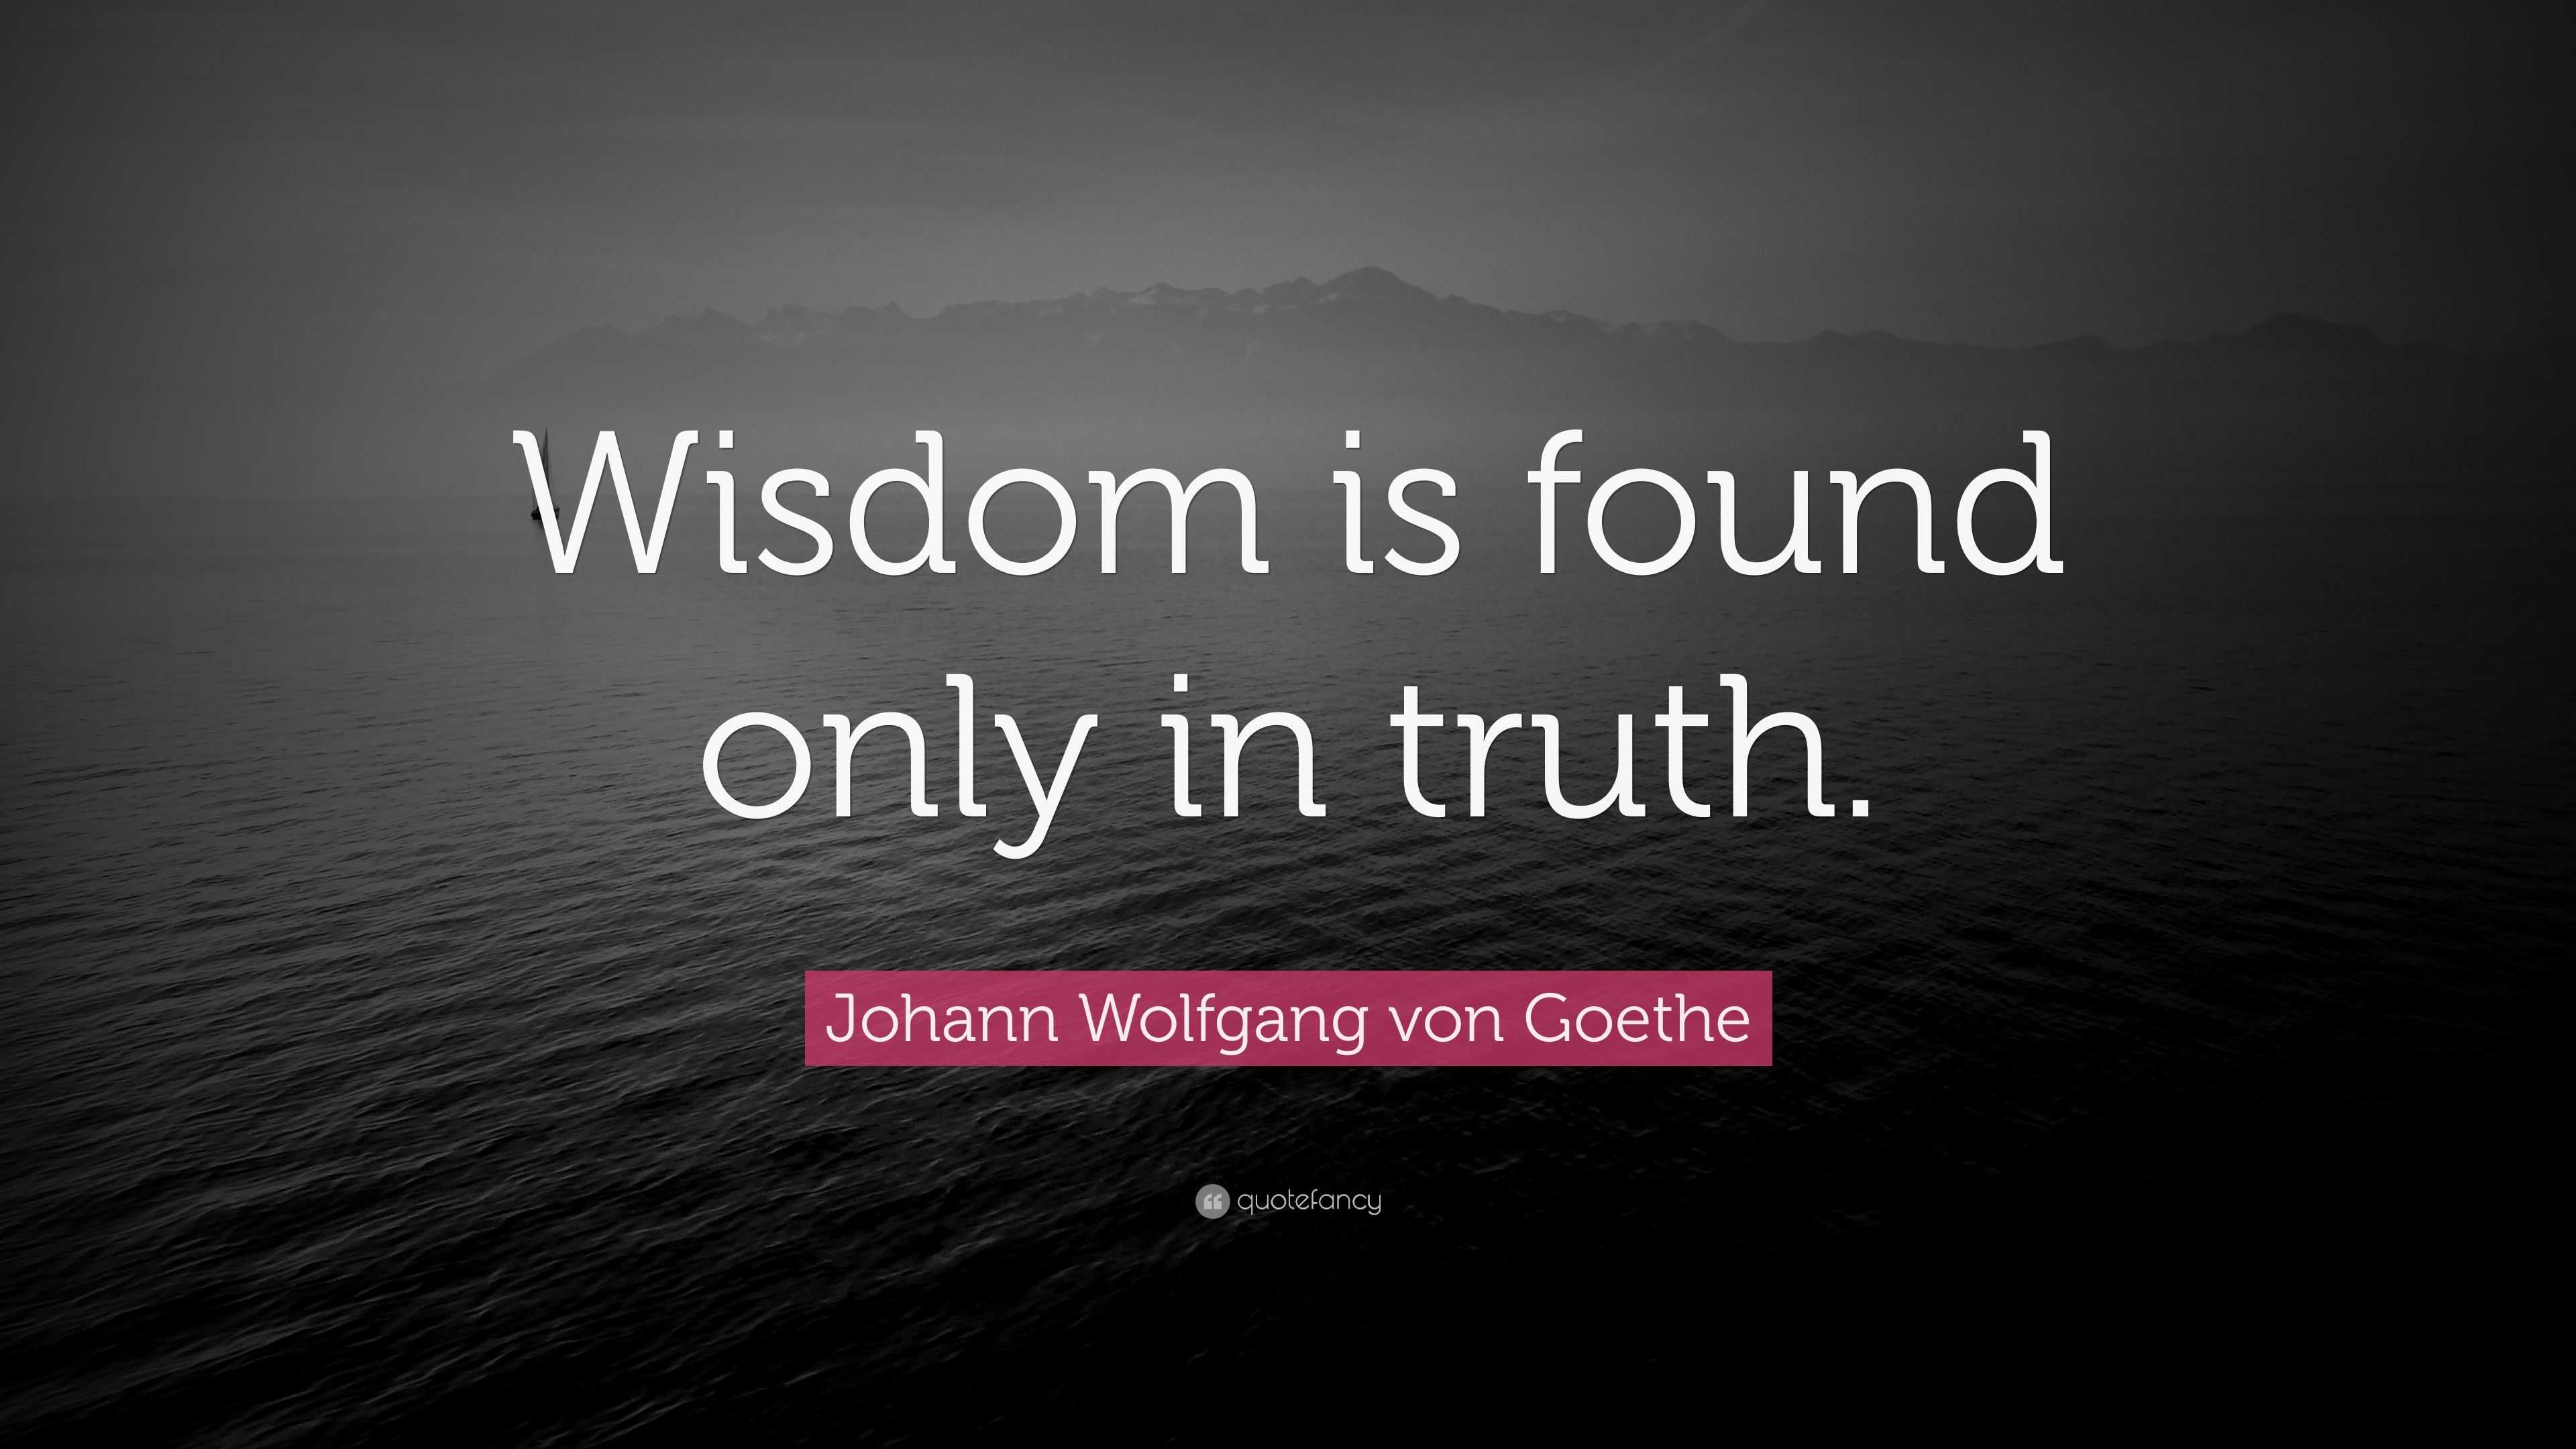 Johann Wolfgang von Goethe Quote: “Wisdom is found only in truth.” (12